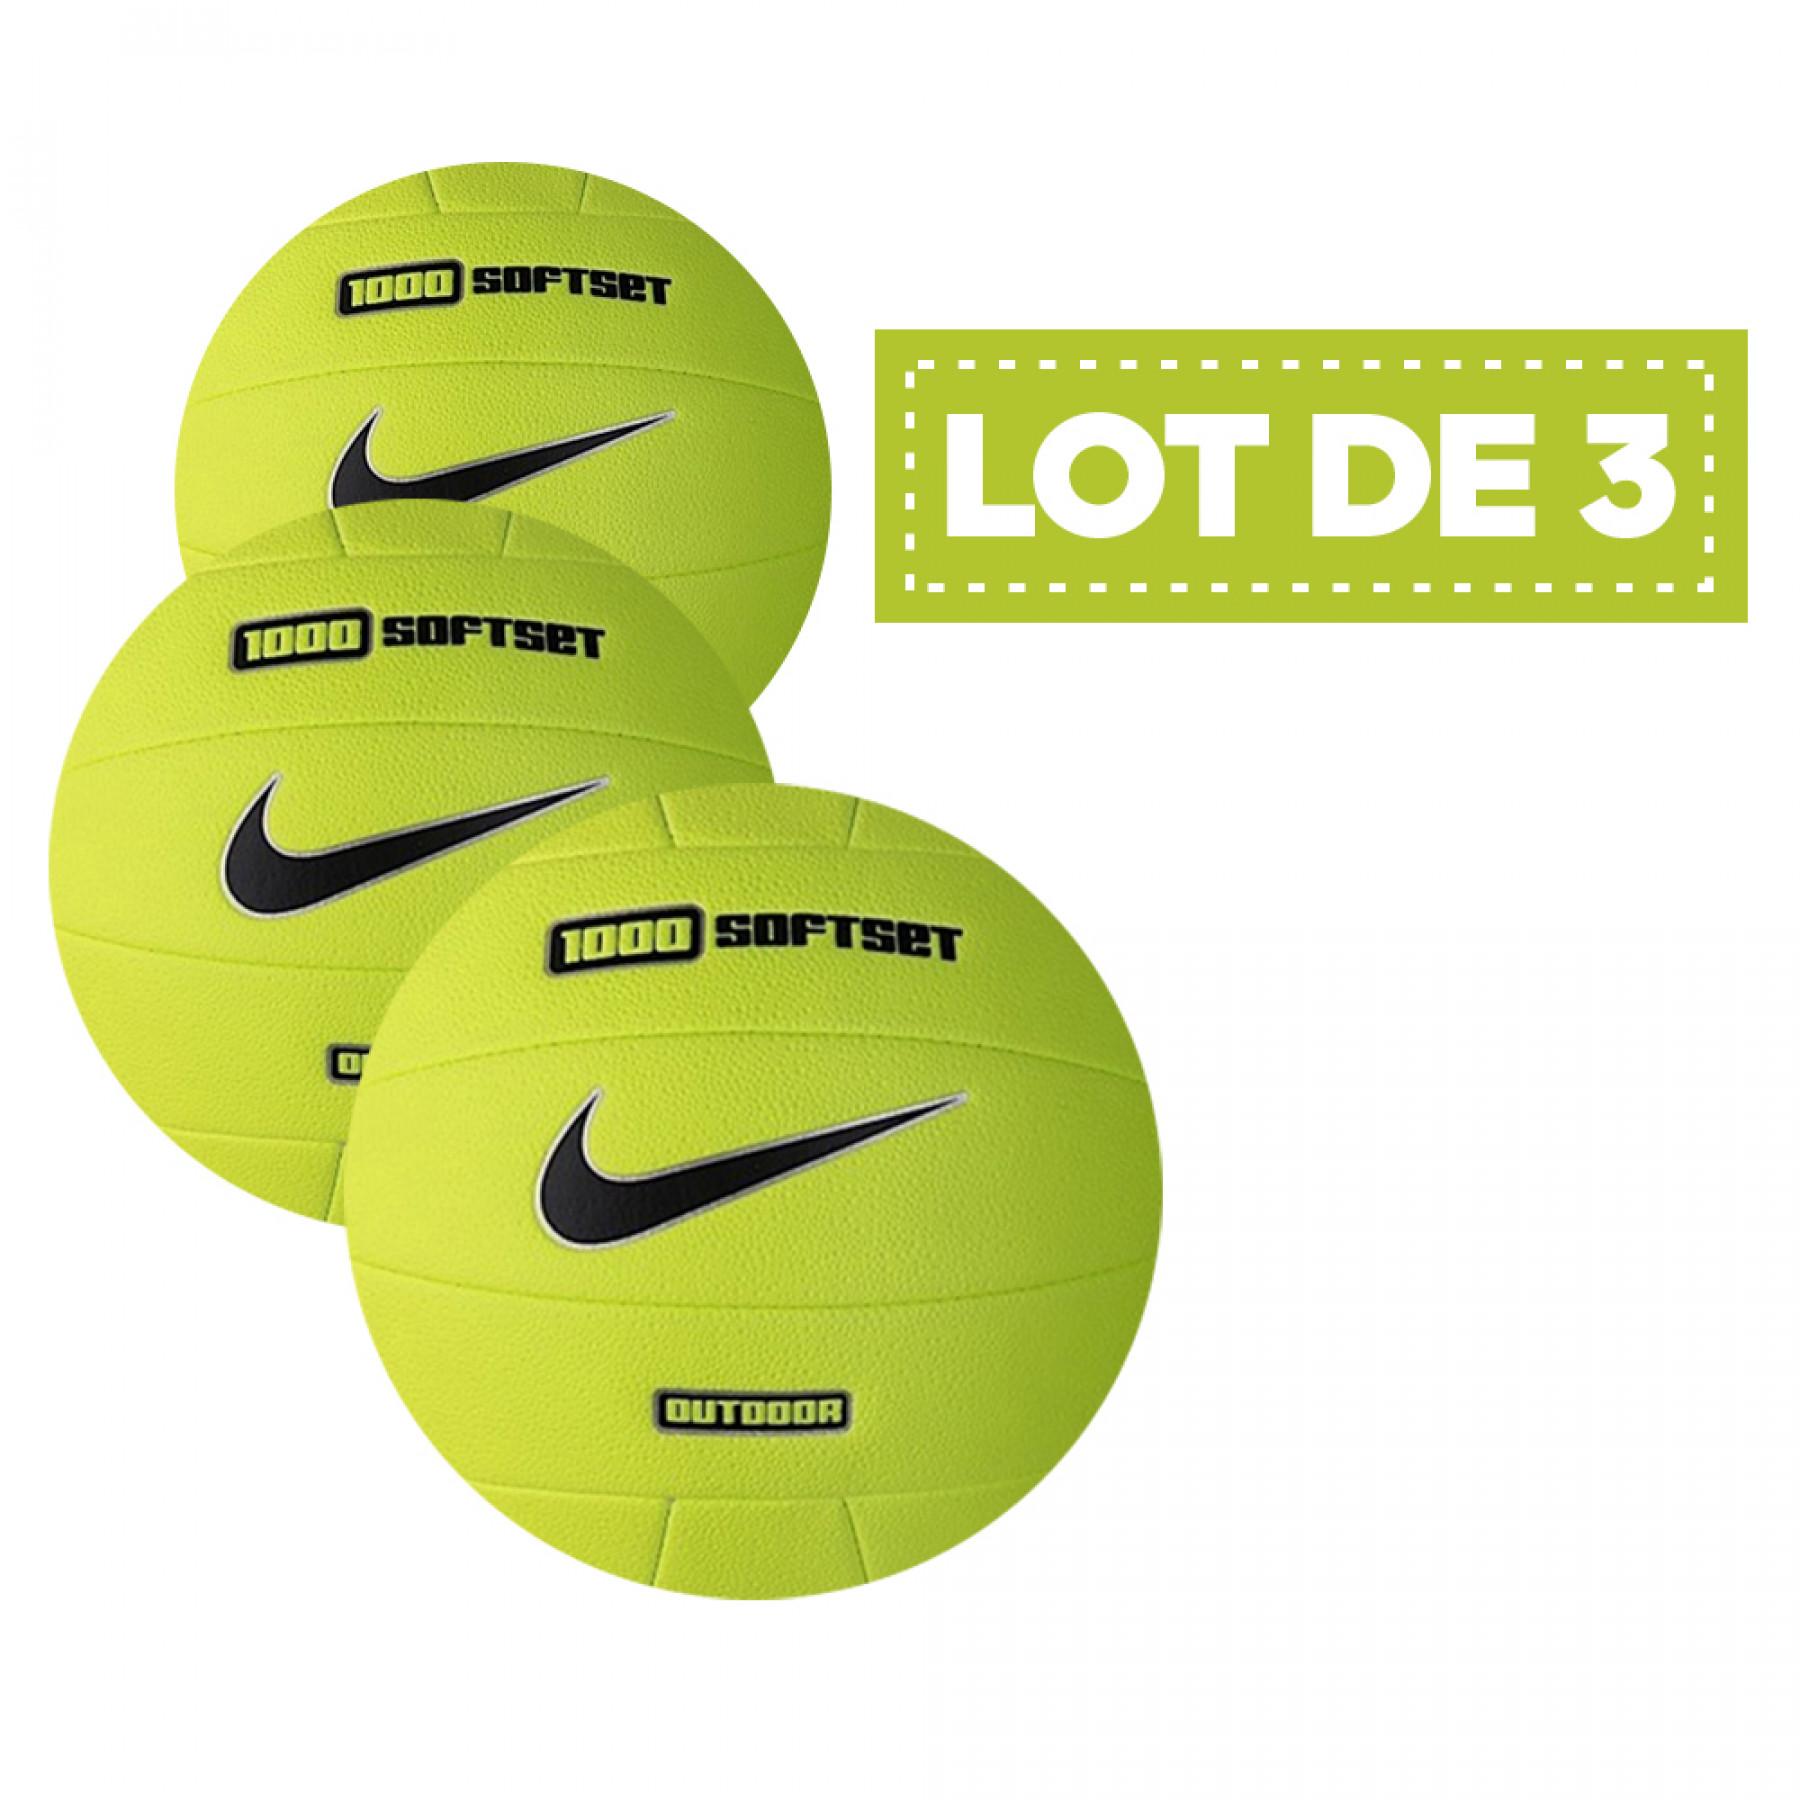 Zestaw 3 balonów Nike 1000 softset outdoor jaune fluo